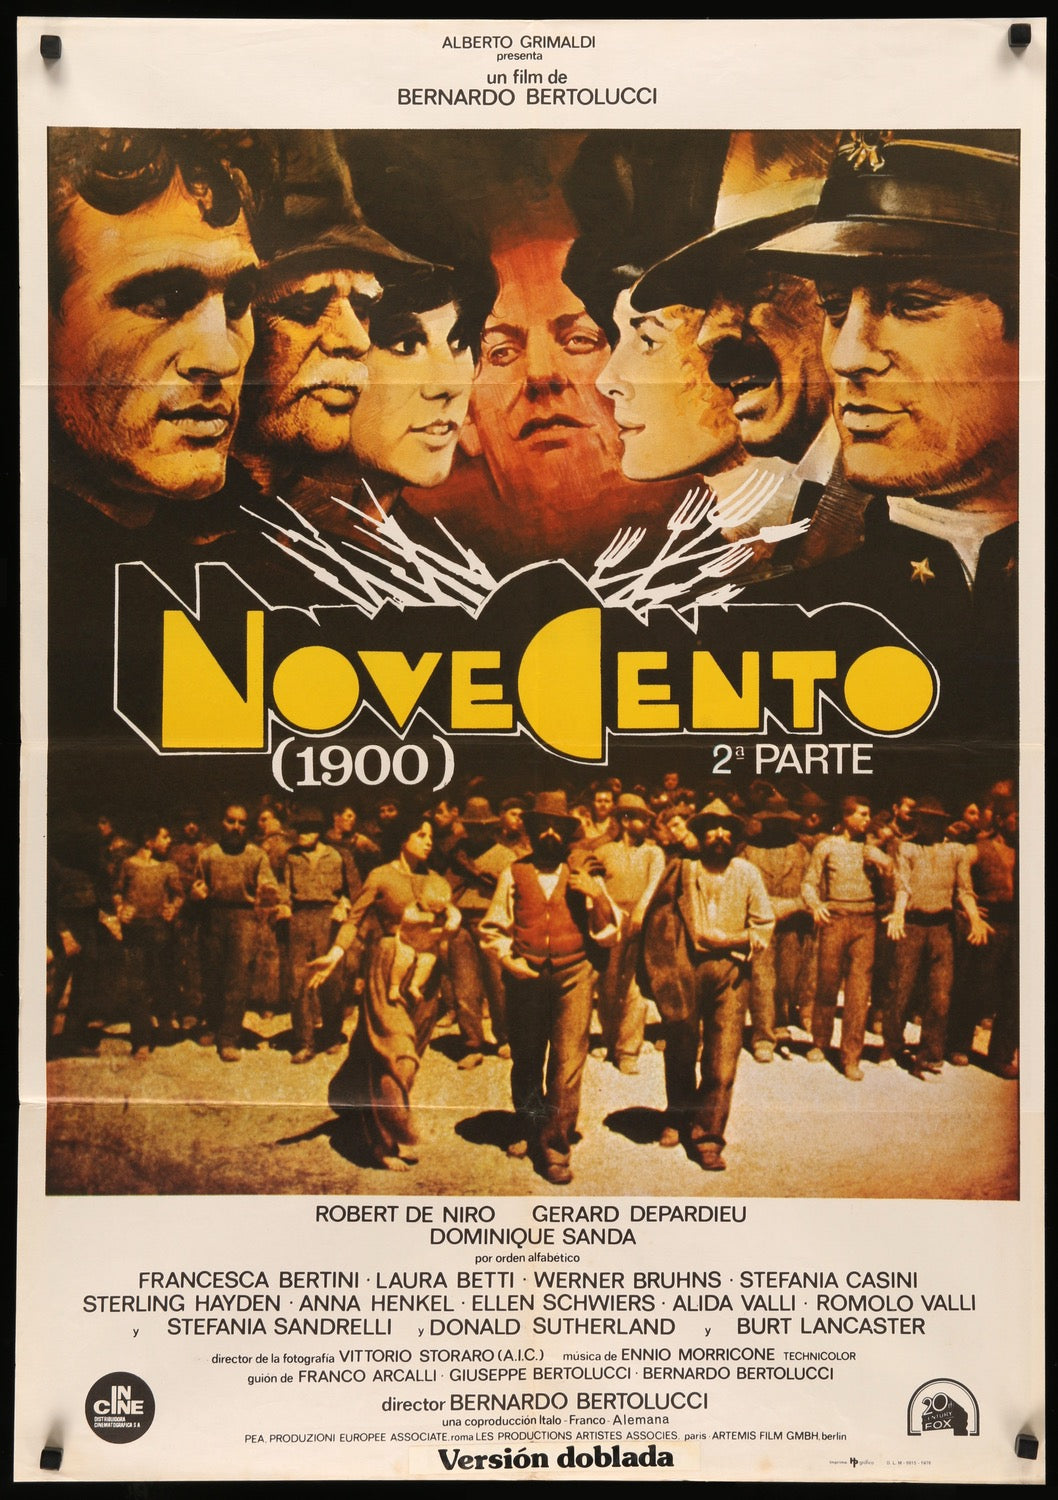 1900 (1976) original movie poster for sale at Original Film Art